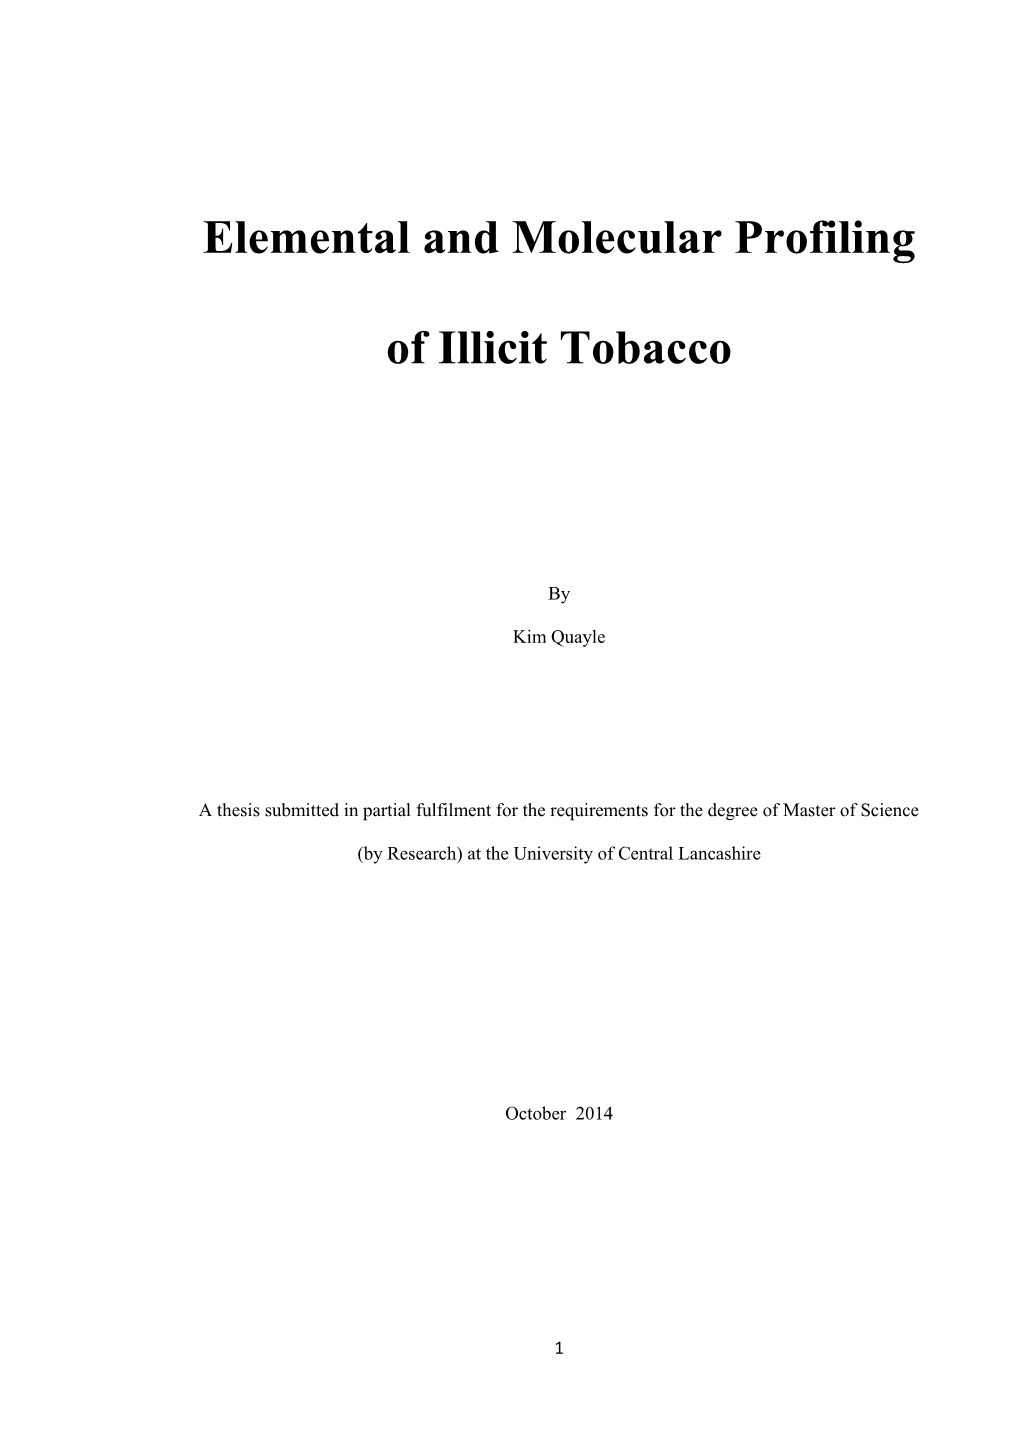 Elemental and Molecular Profiling of Illicit Tobacco